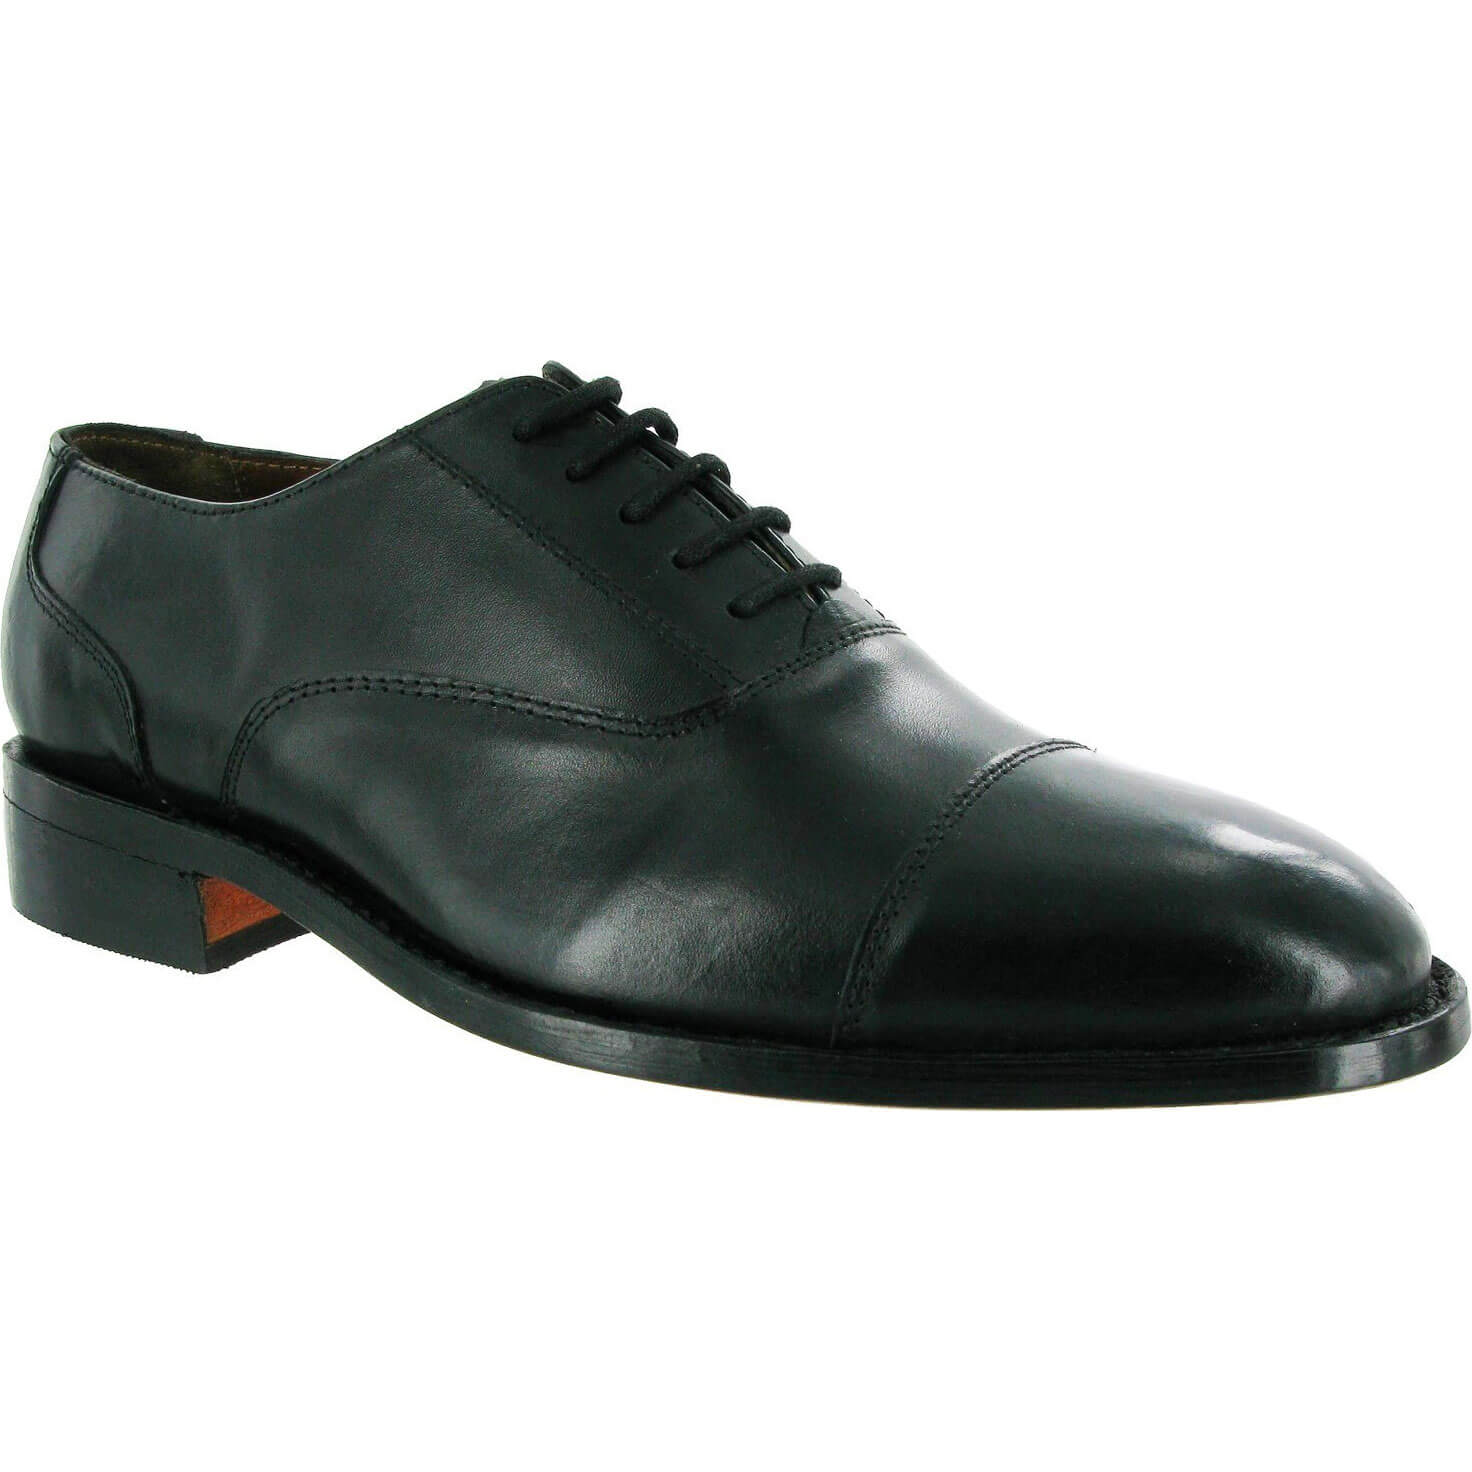 Image of Amblers James Leather Soled Oxford Dress Shoe Black Size 10